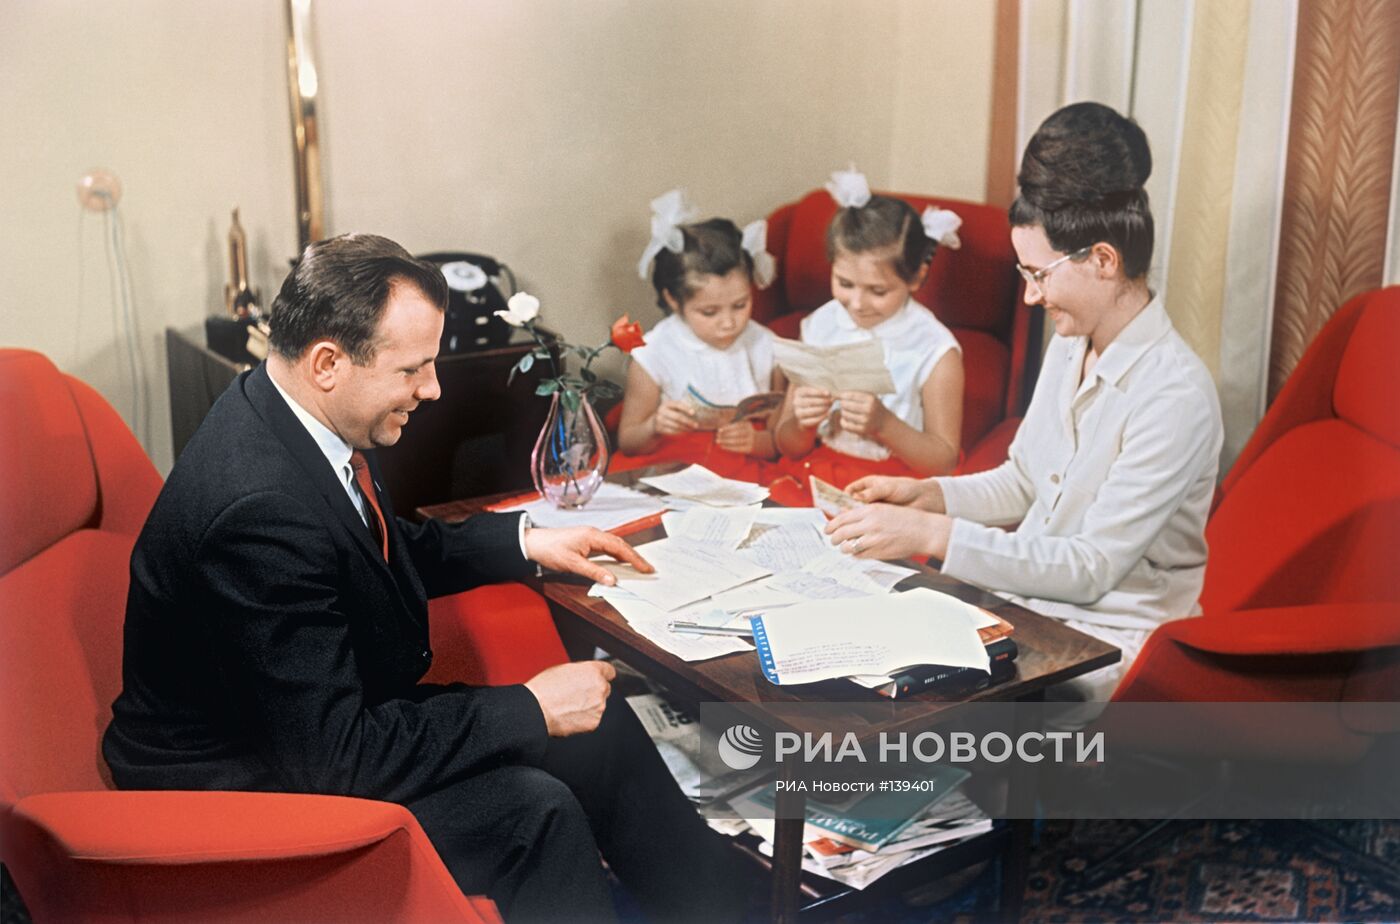 Юрий Гагарин в кругу семьи